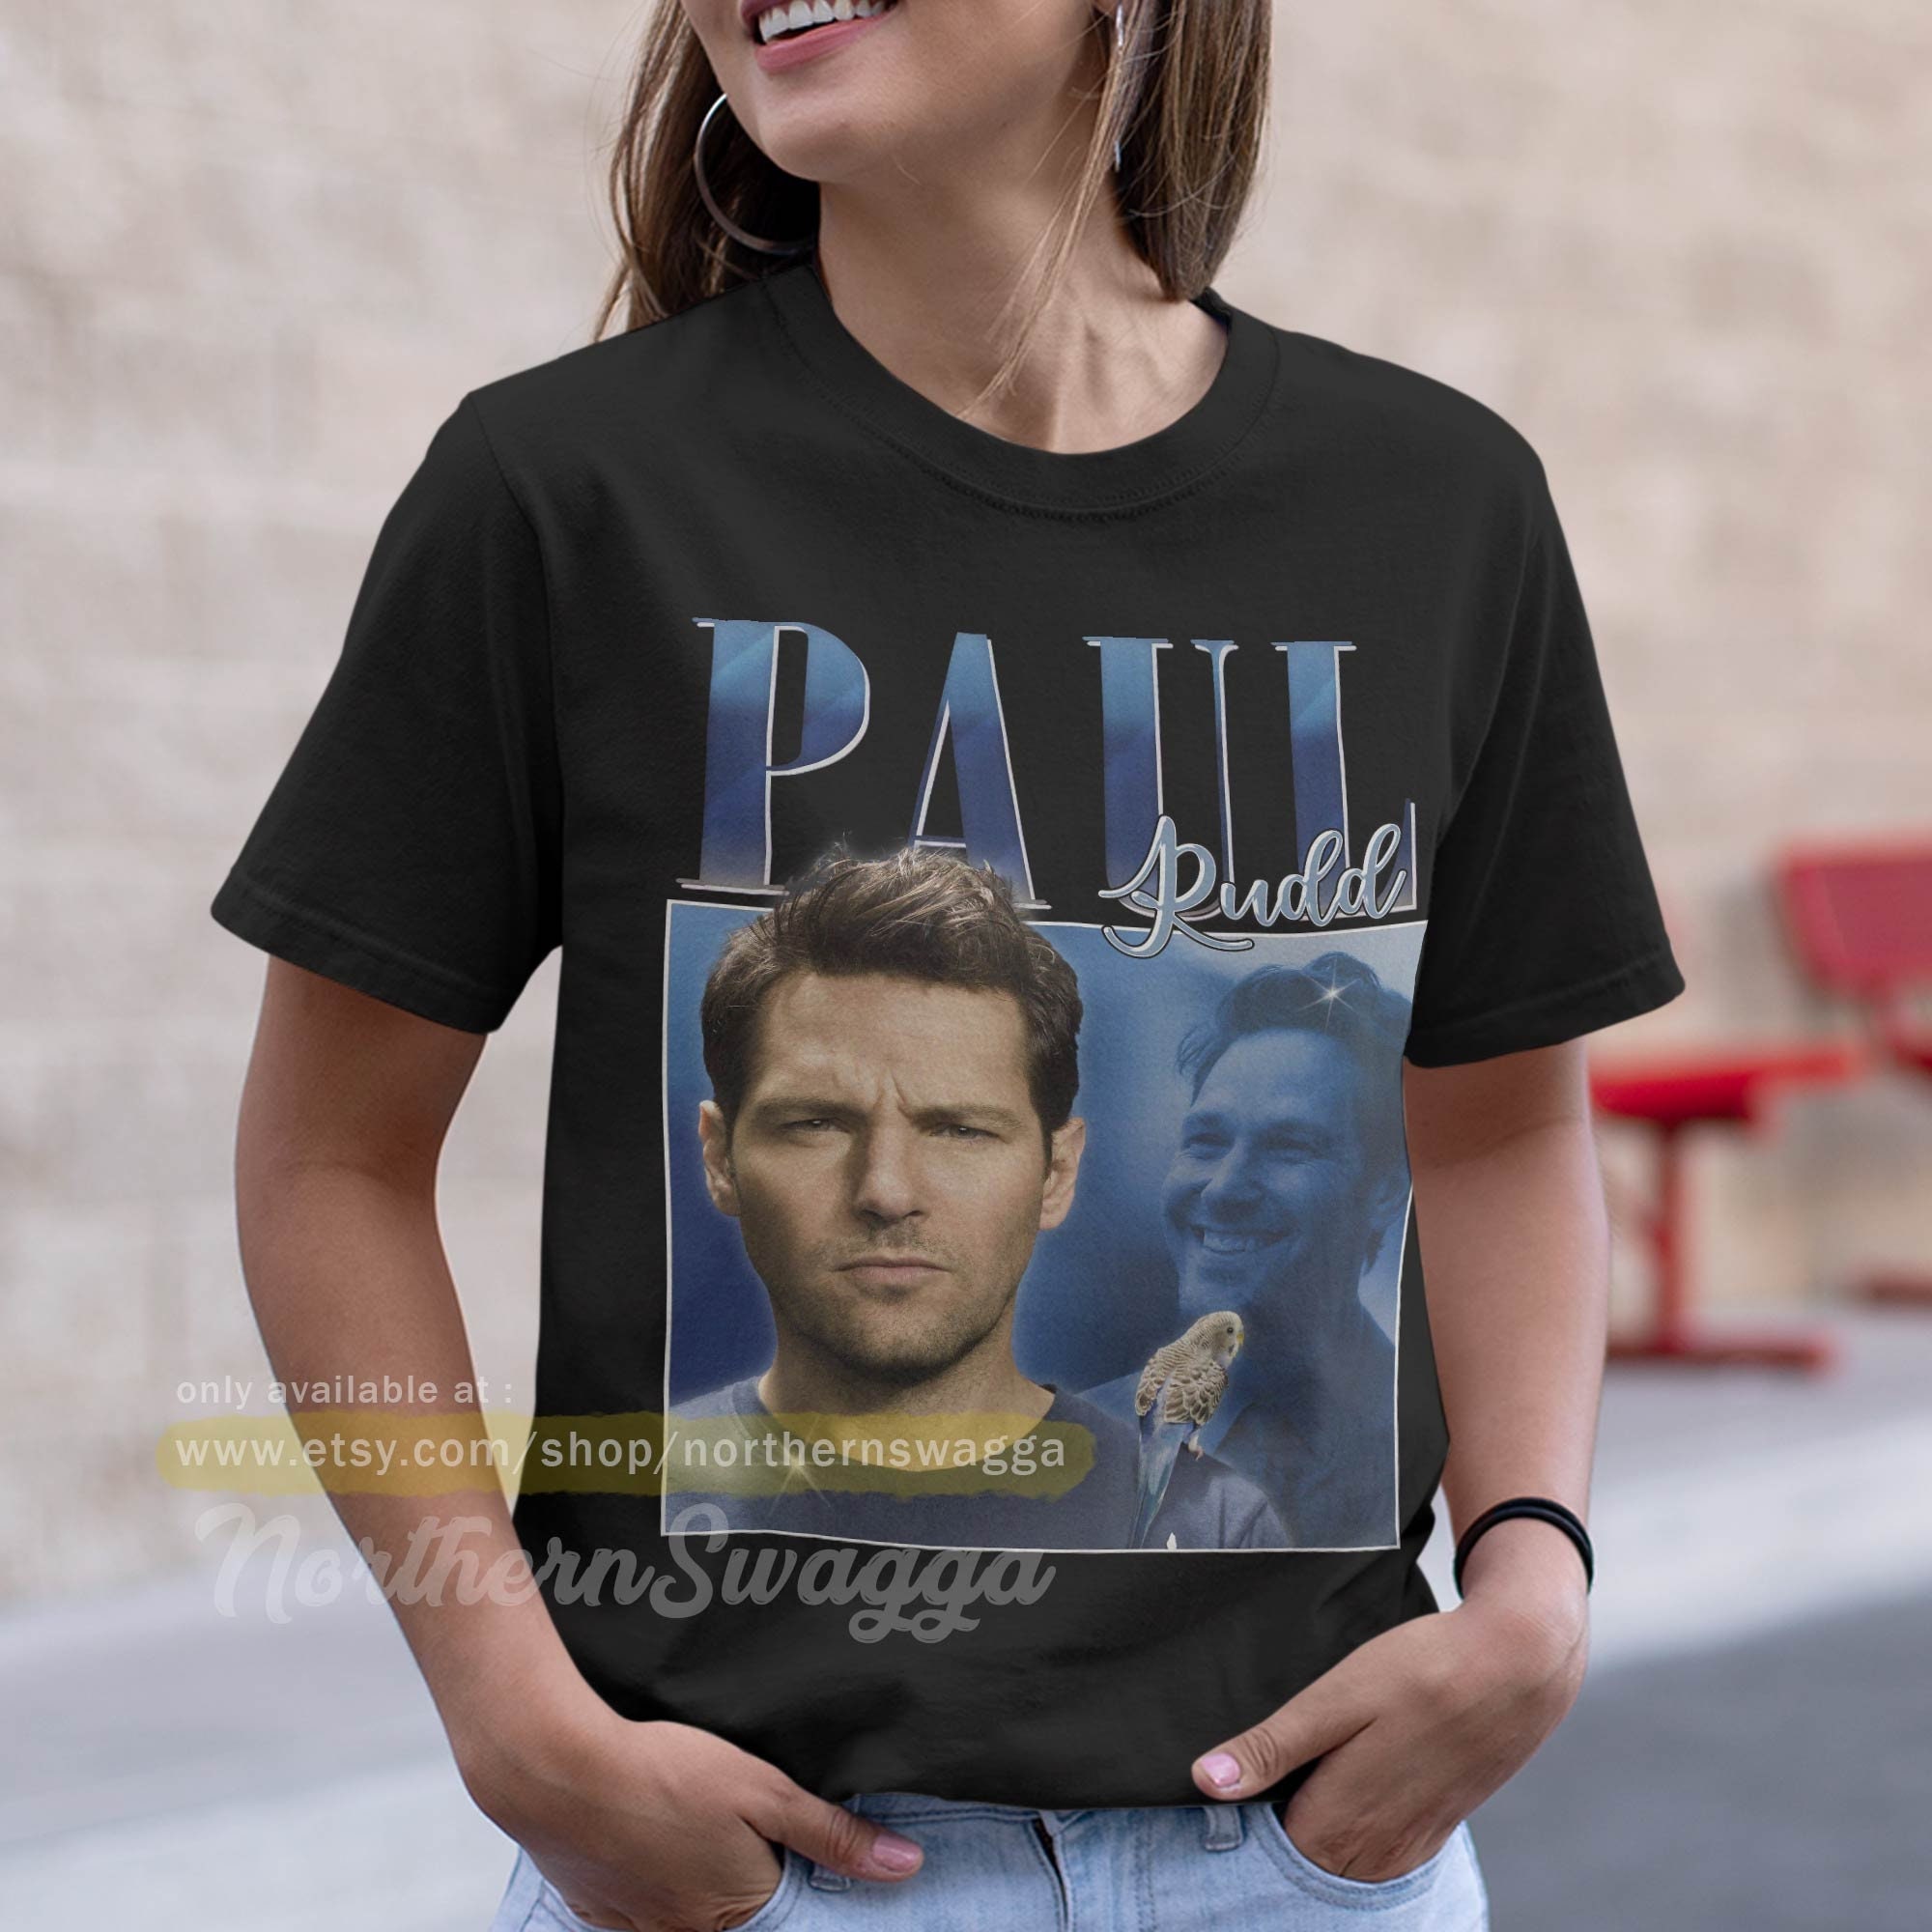 Paul rudd shirt cool fan art t-shirt 90s poster design retro style 184 tee-1